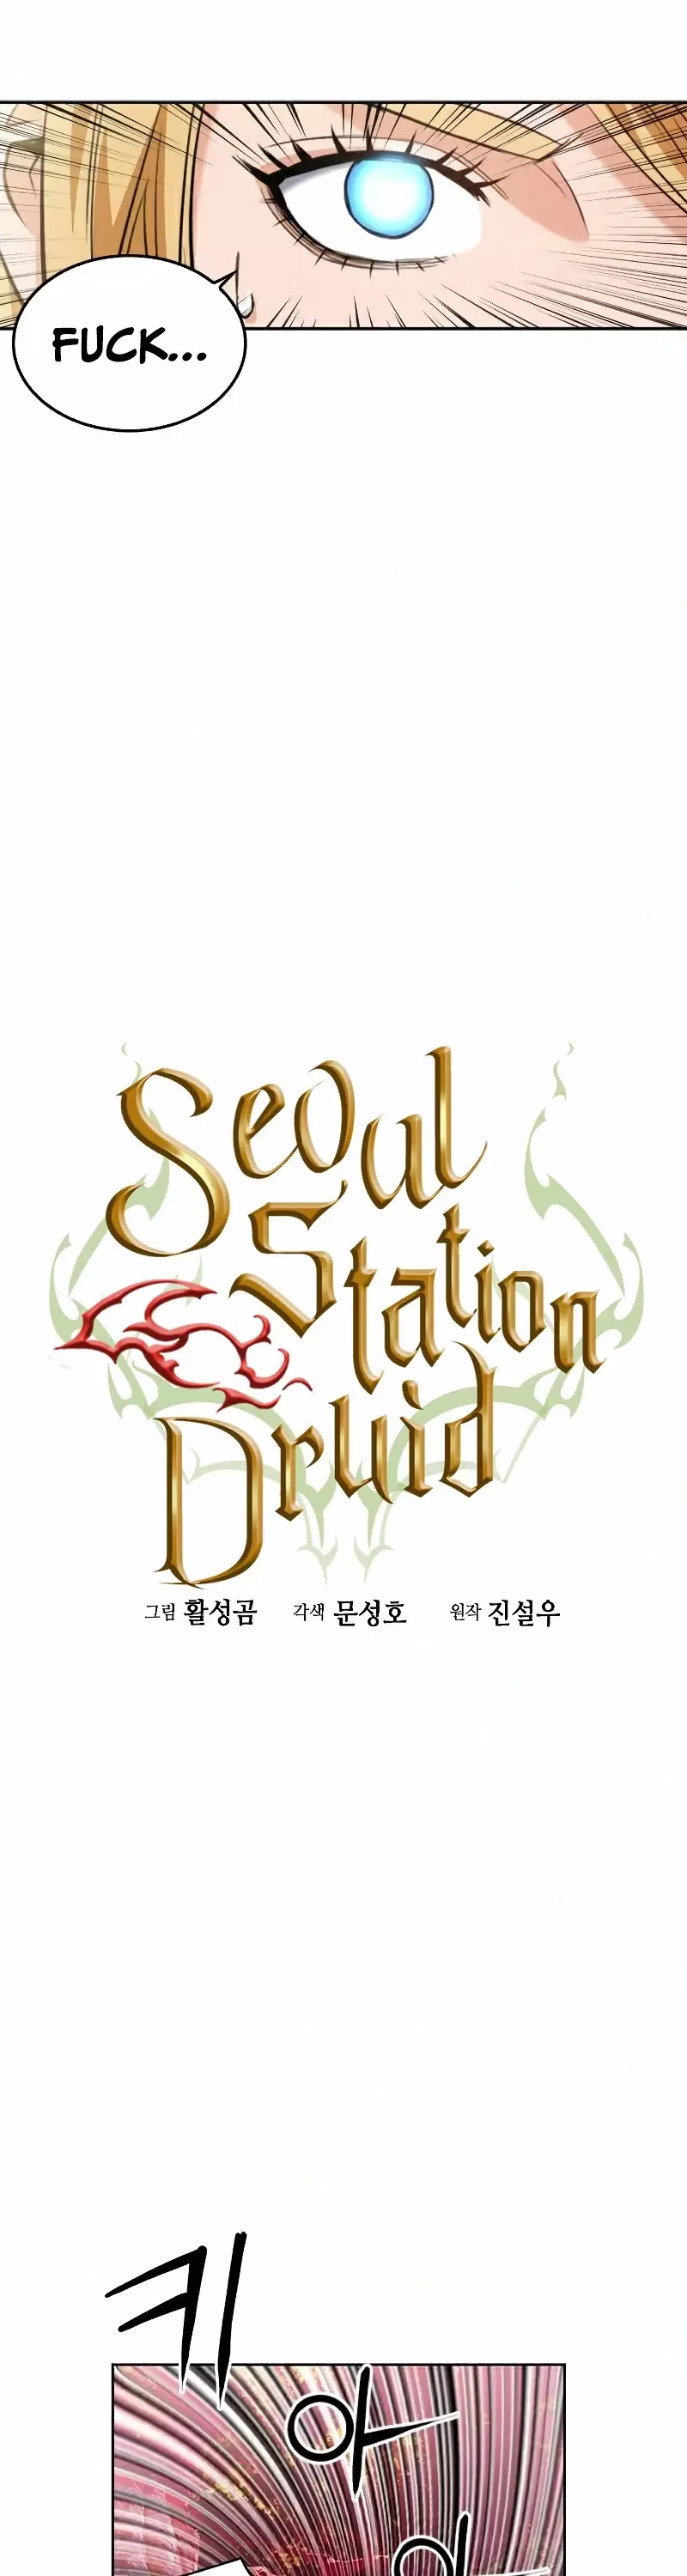 Seoul Station Druid - 26 page 3